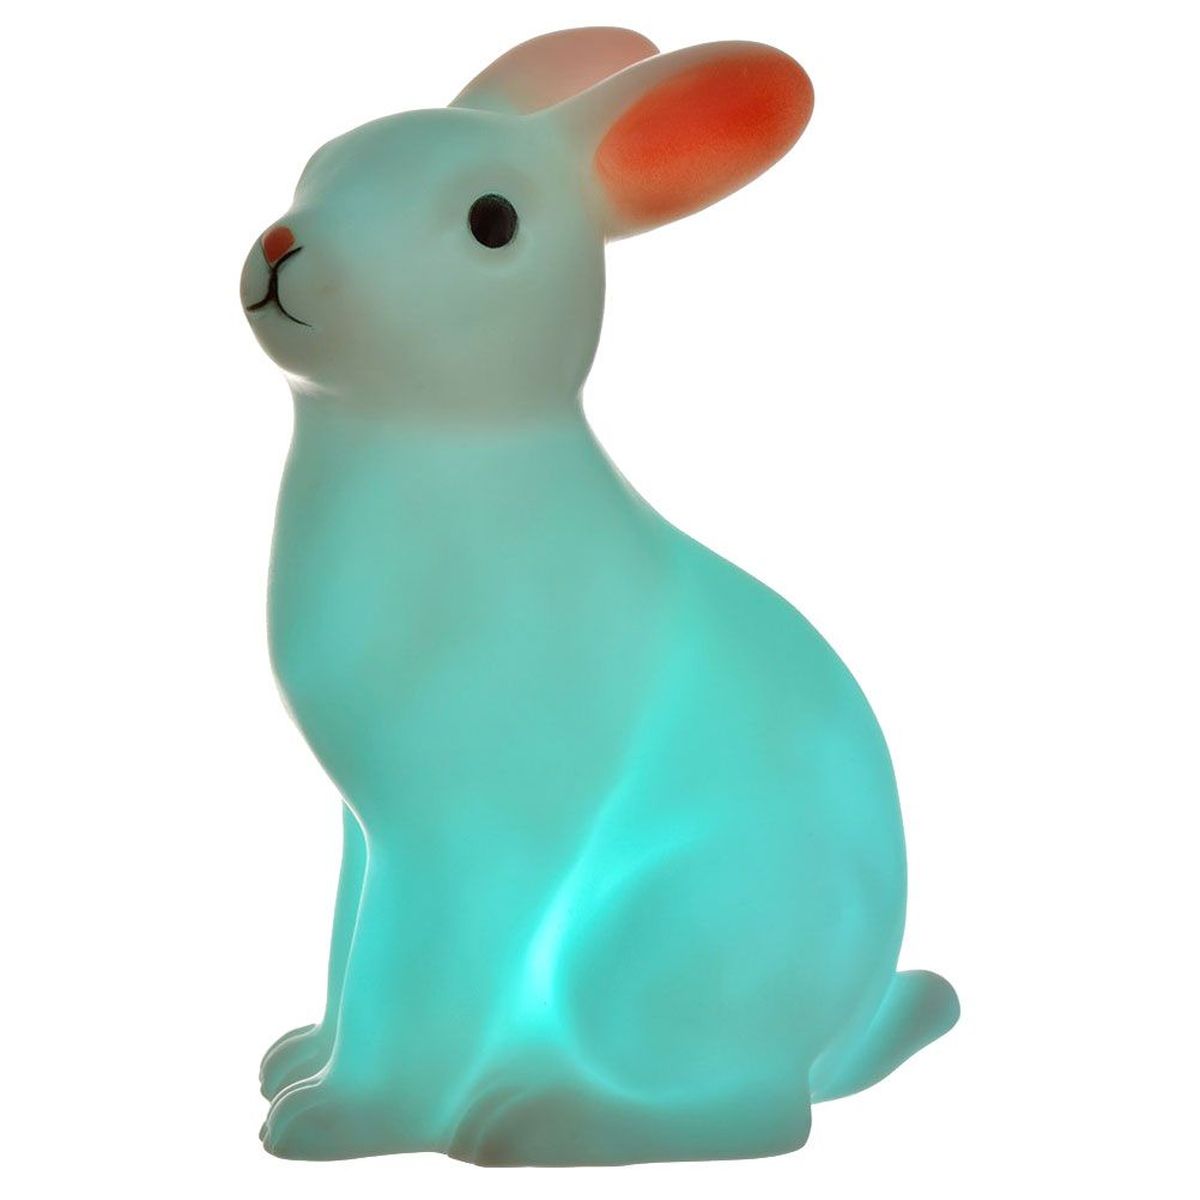 Nightlight shaped Rabbit - multicolor led